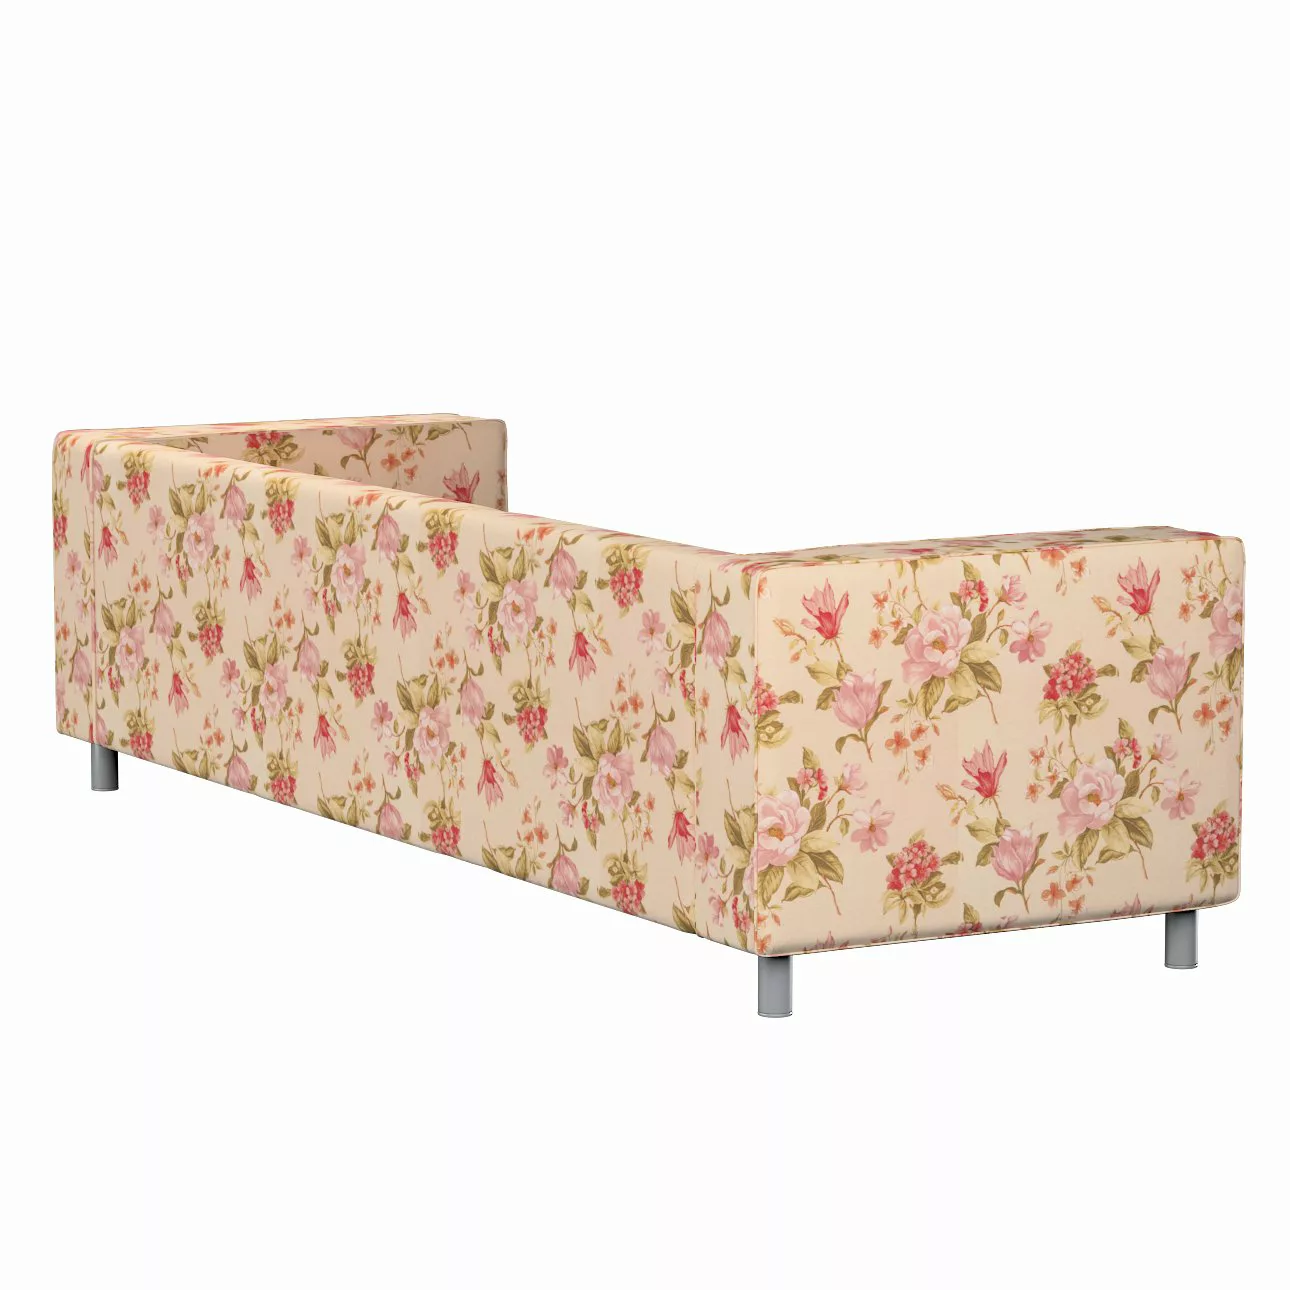 Bezug für Klippan 4-Sitzer Sofa, creme-rosa, Bezug für Klippan 4-Sitzer, Lo günstig online kaufen